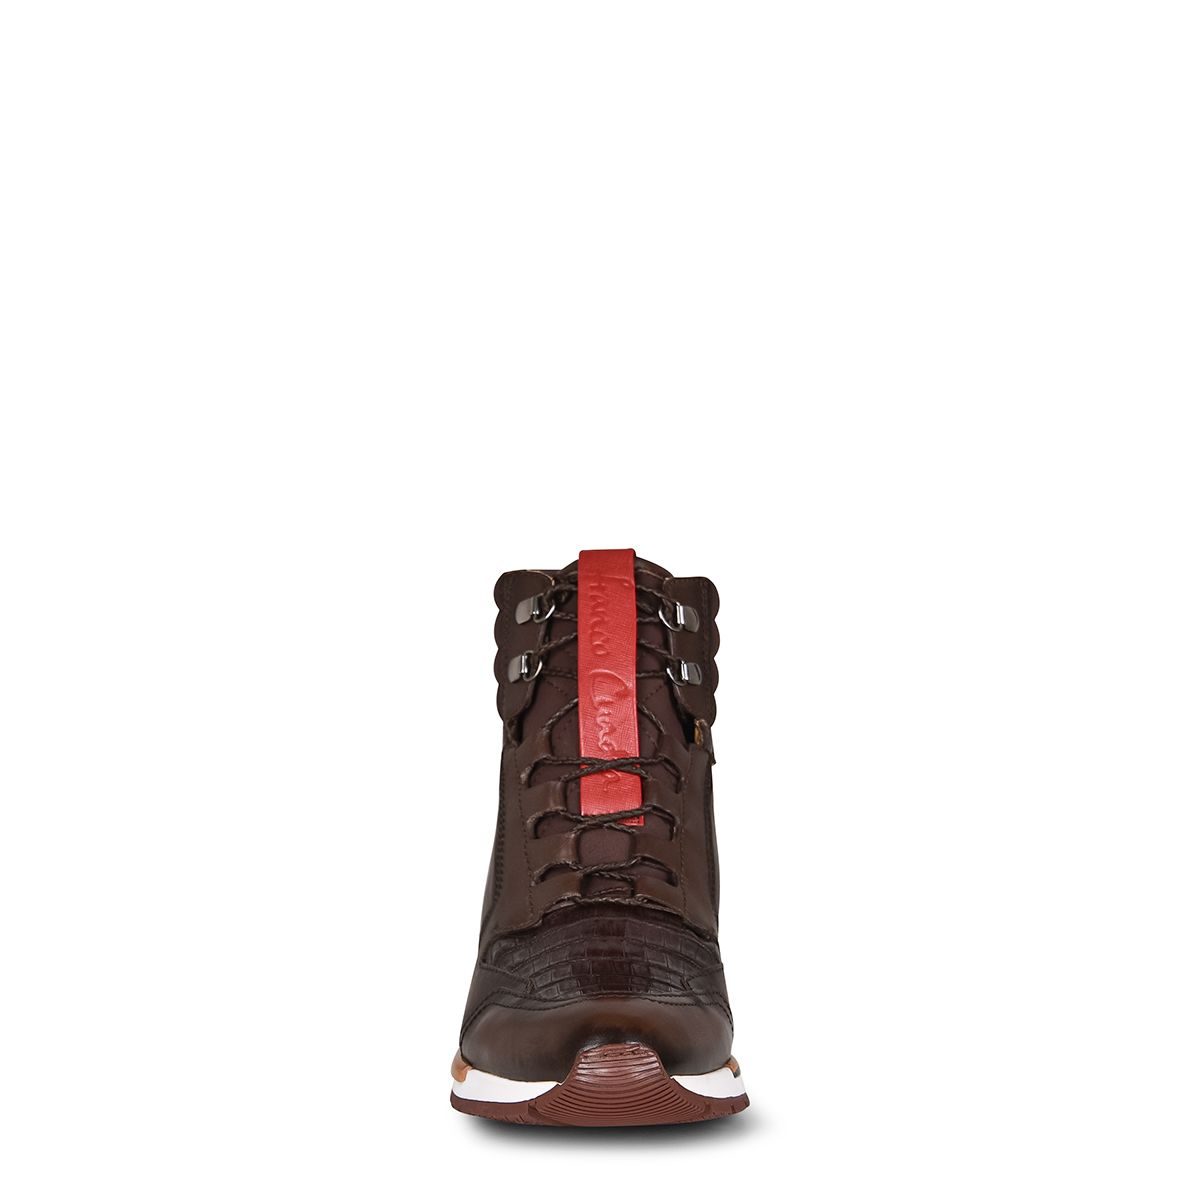 N48CWTS - Cuadra brown casual fashion caiman leather sneaker boots for men-FRANCO CUADRA-Kuet-Cuadra-Boots